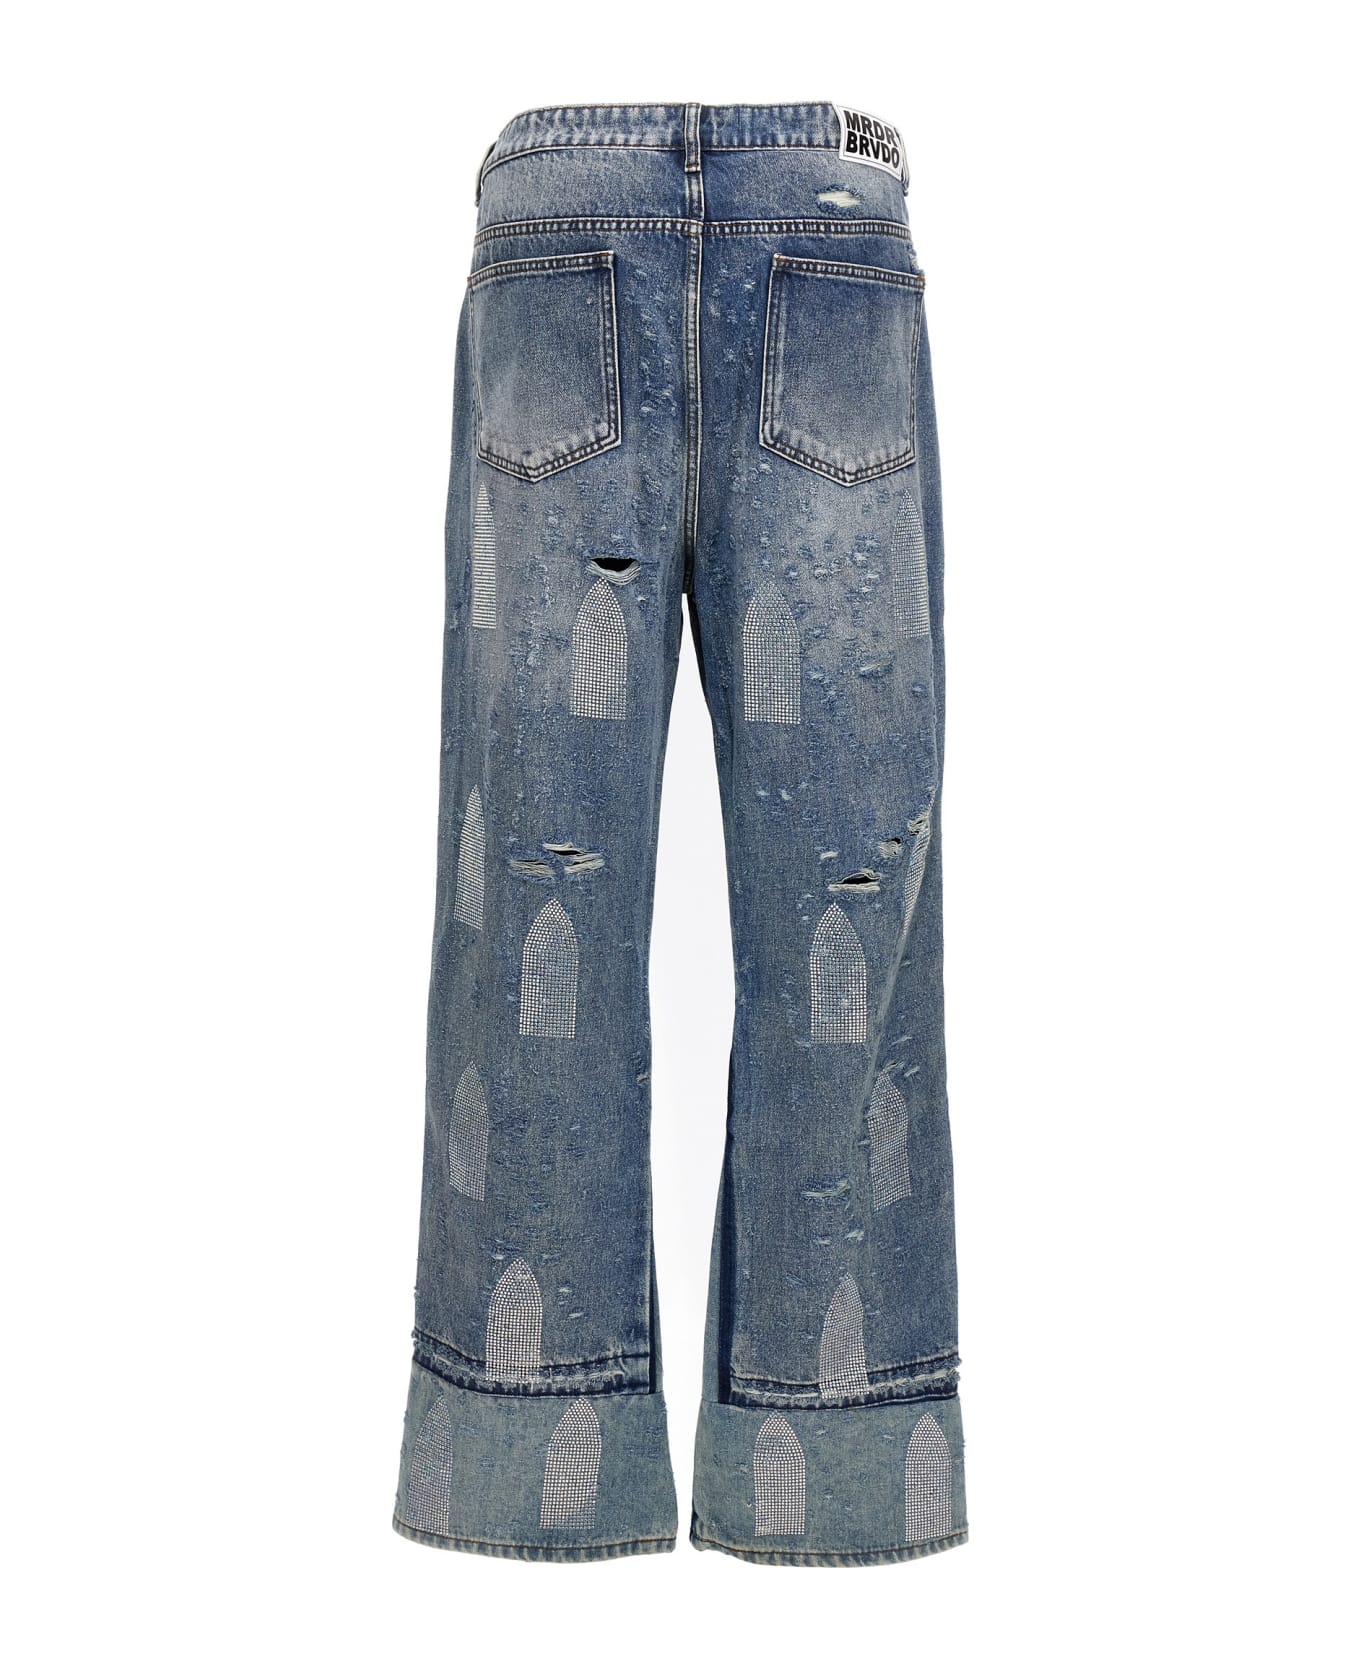 Who Decides War 'rhinestone Washed Denim' Jeans - Light Blue デニム